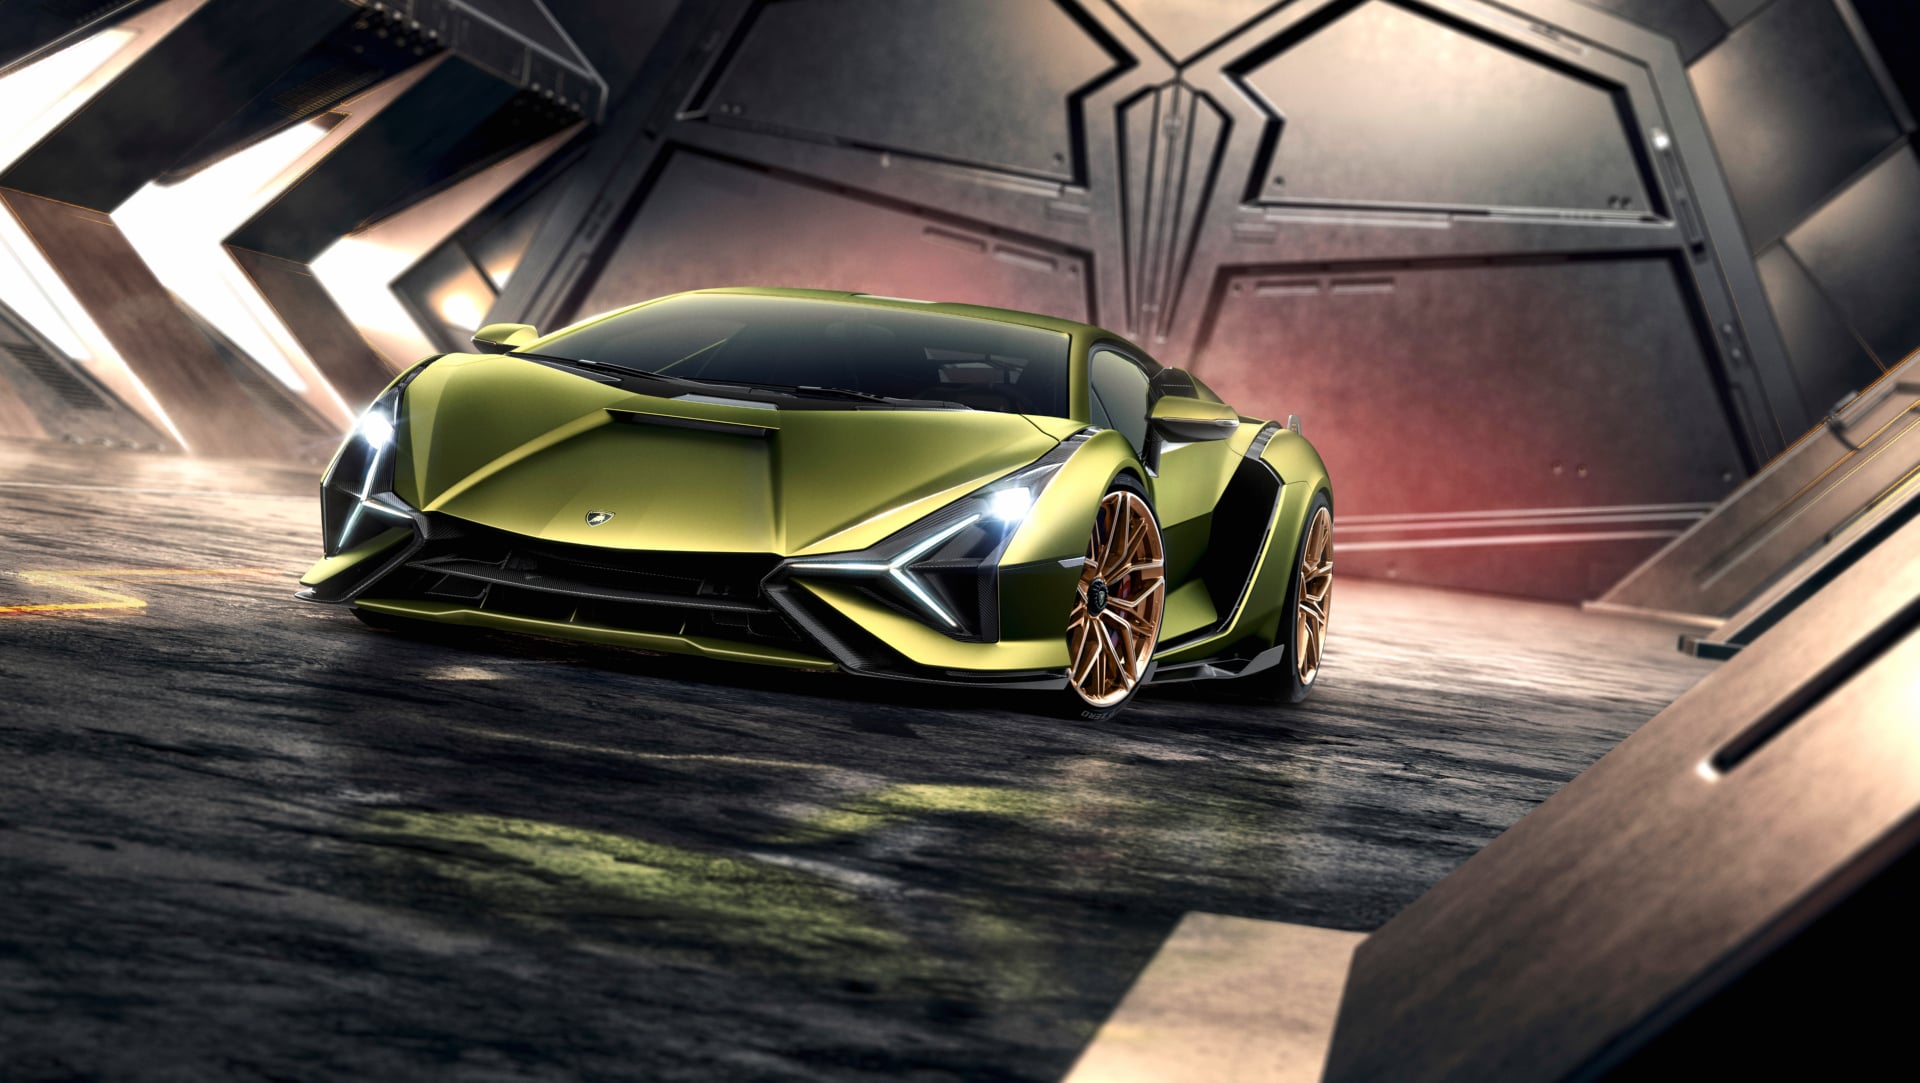 Lamborghini Sian at 1024 x 1024 iPad size wallpapers HD quality